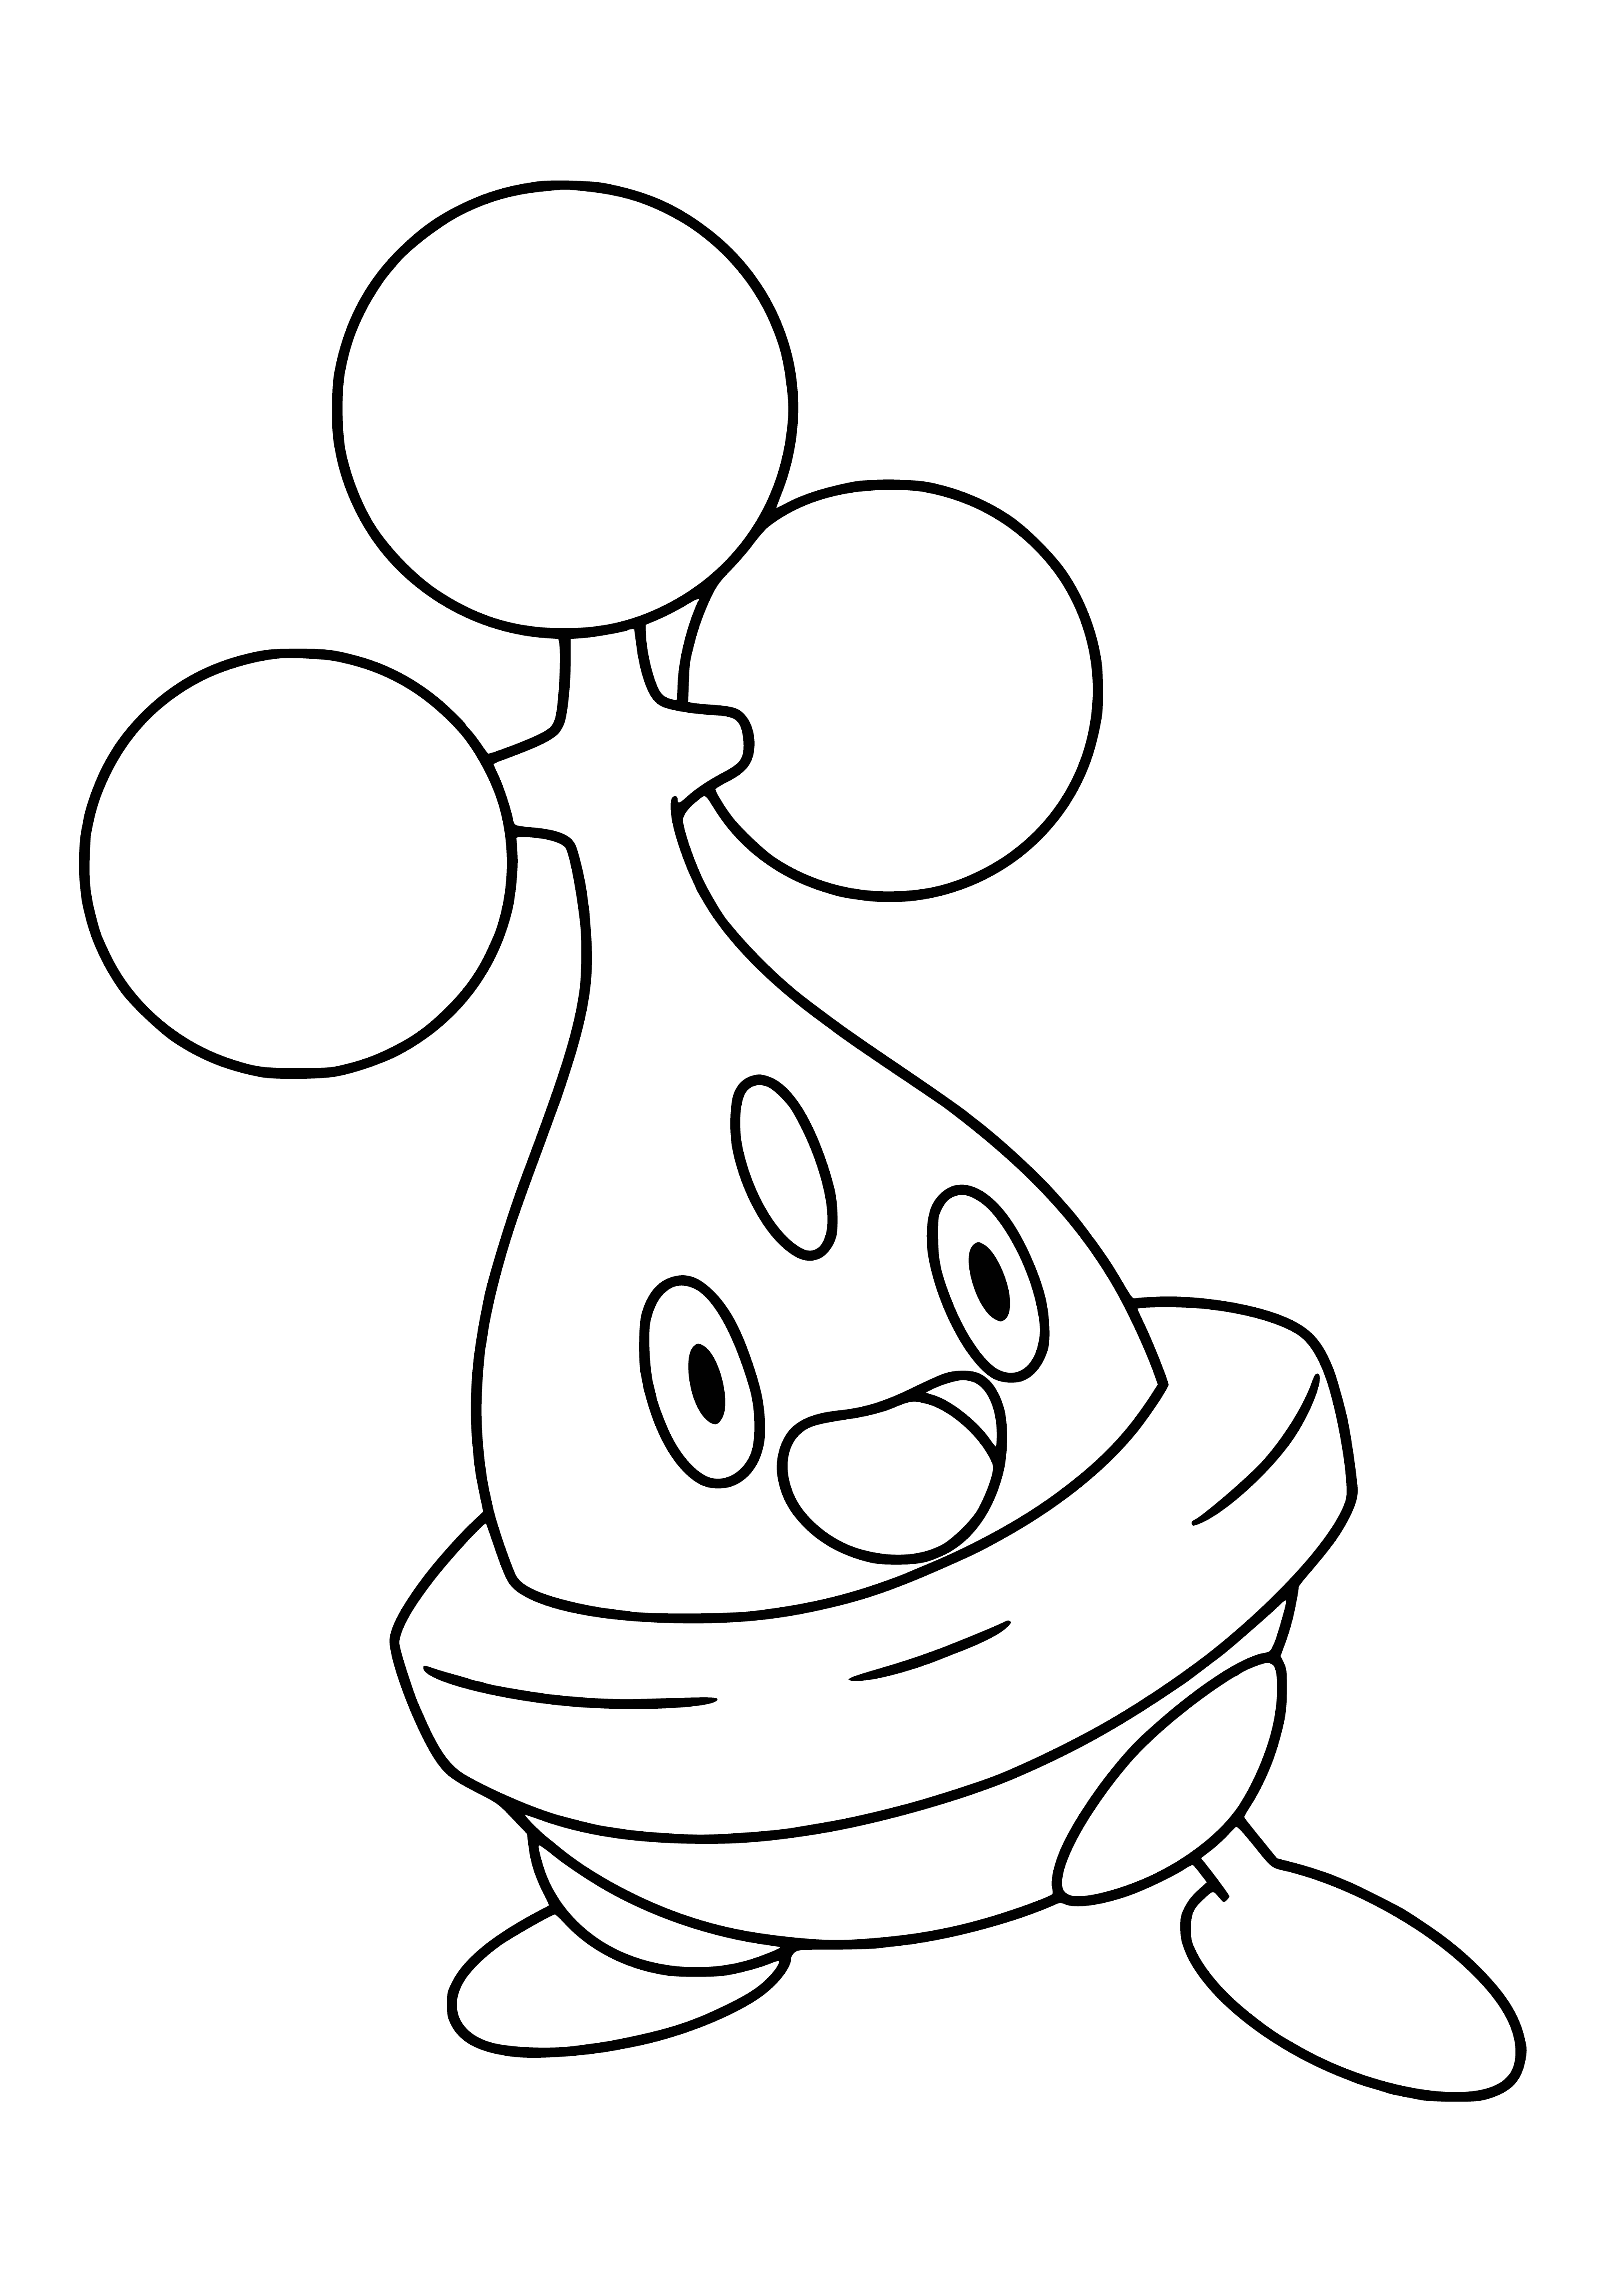 Pokemon Bonsley (Bonsly) coloring page